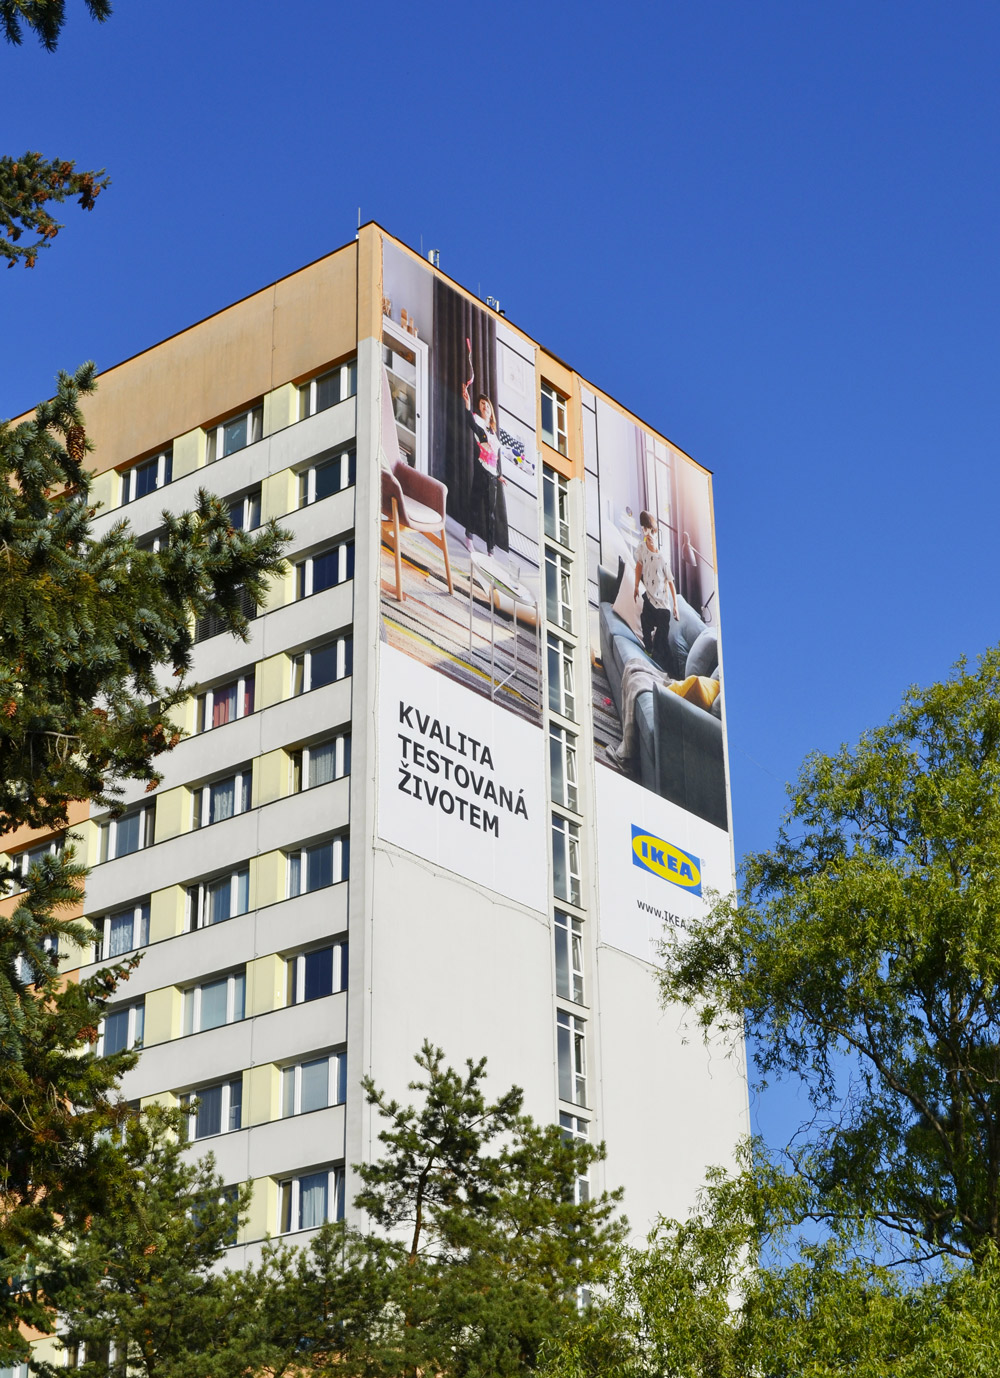 WEREK-MEDIA-Reklamni-plochy-Brno---038ZB-Halasovo-namesti---klient-IKEA---OOH-kampan-10-2018-(9)